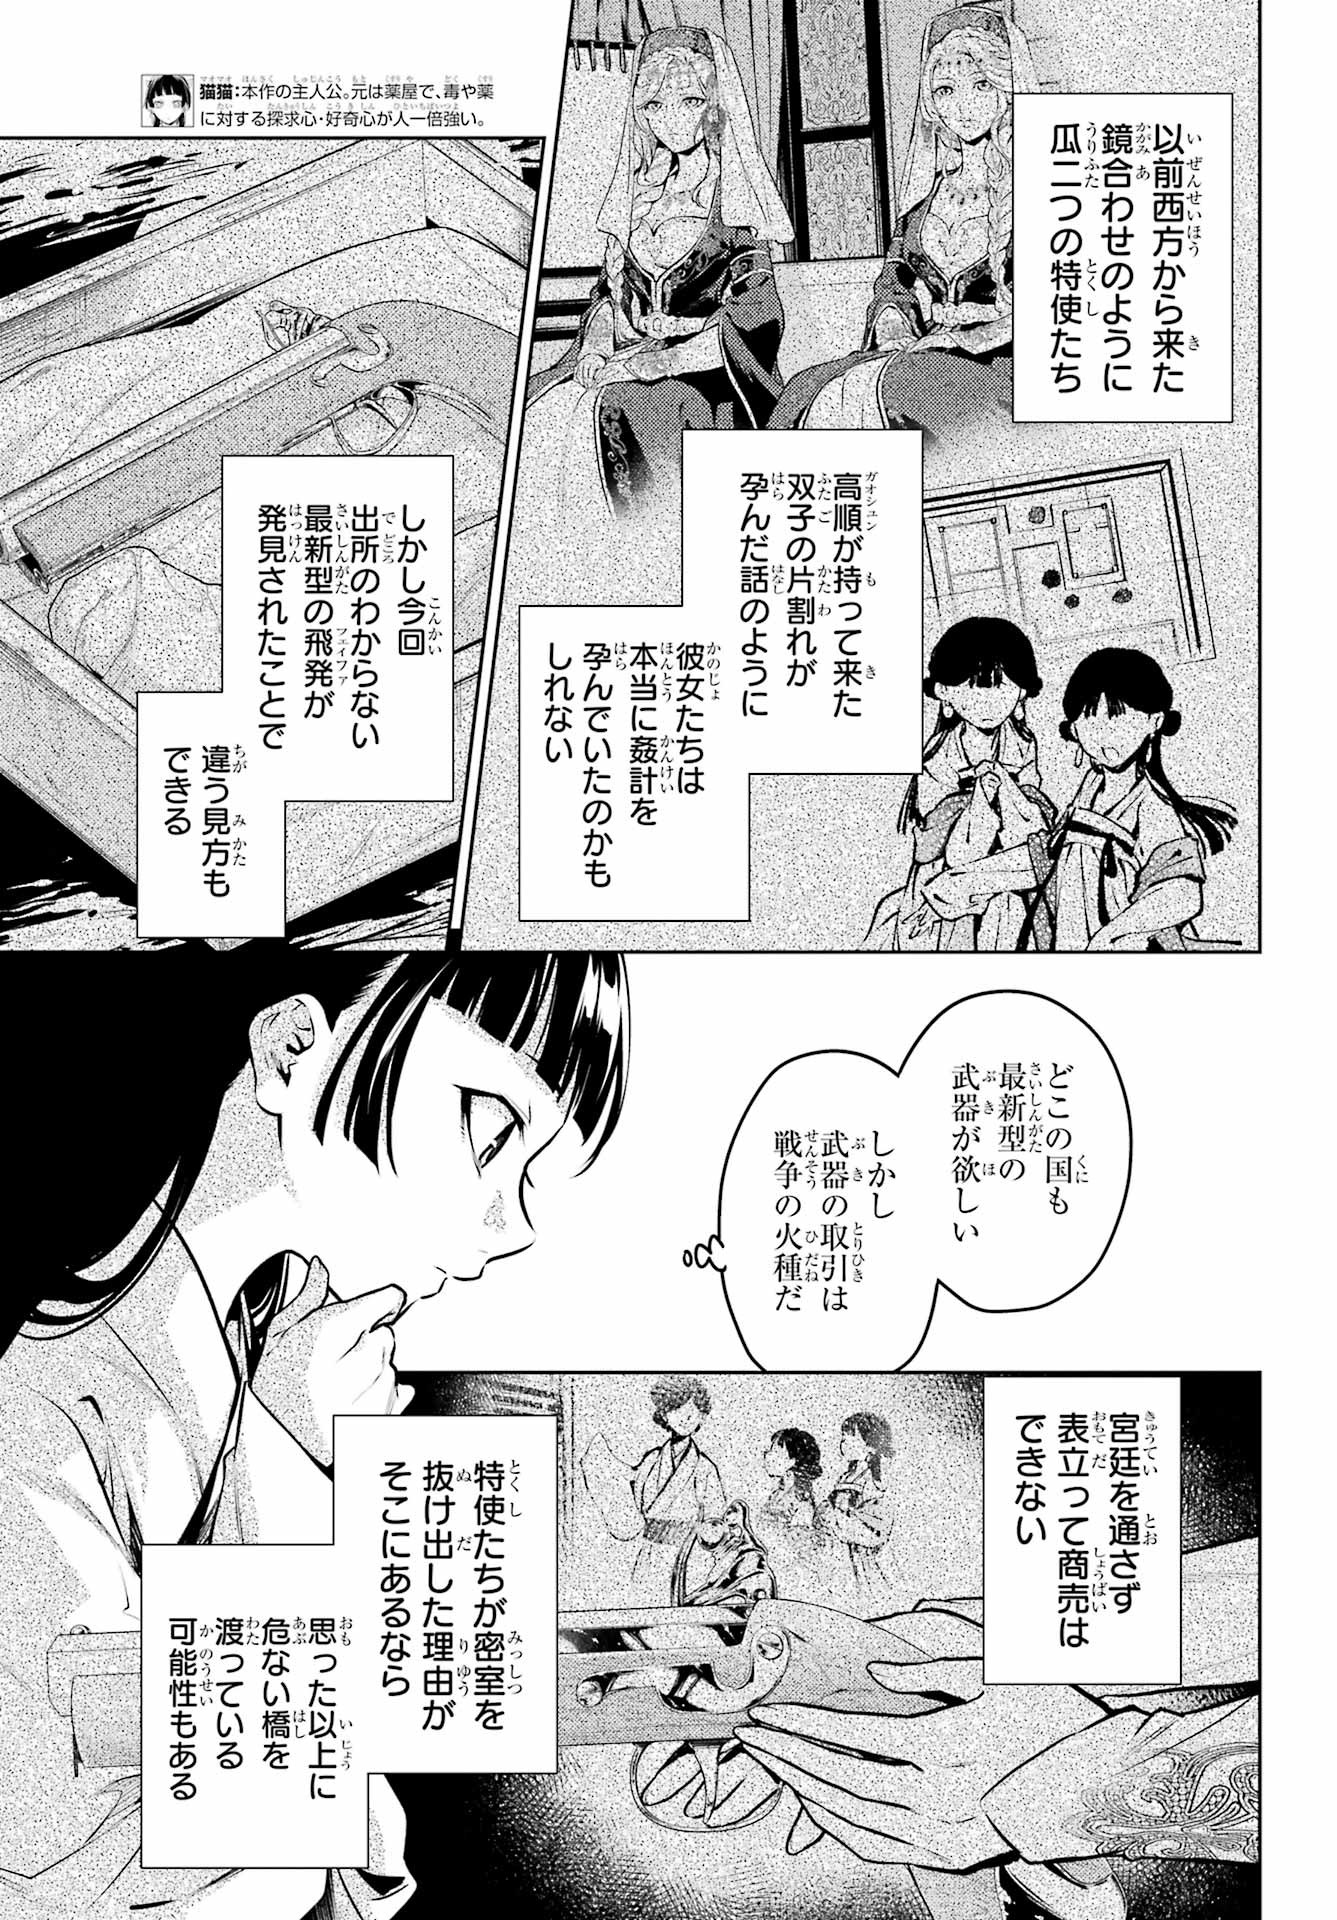 Kusuriya no Hitorigoto - Chapter 64 - Page 2